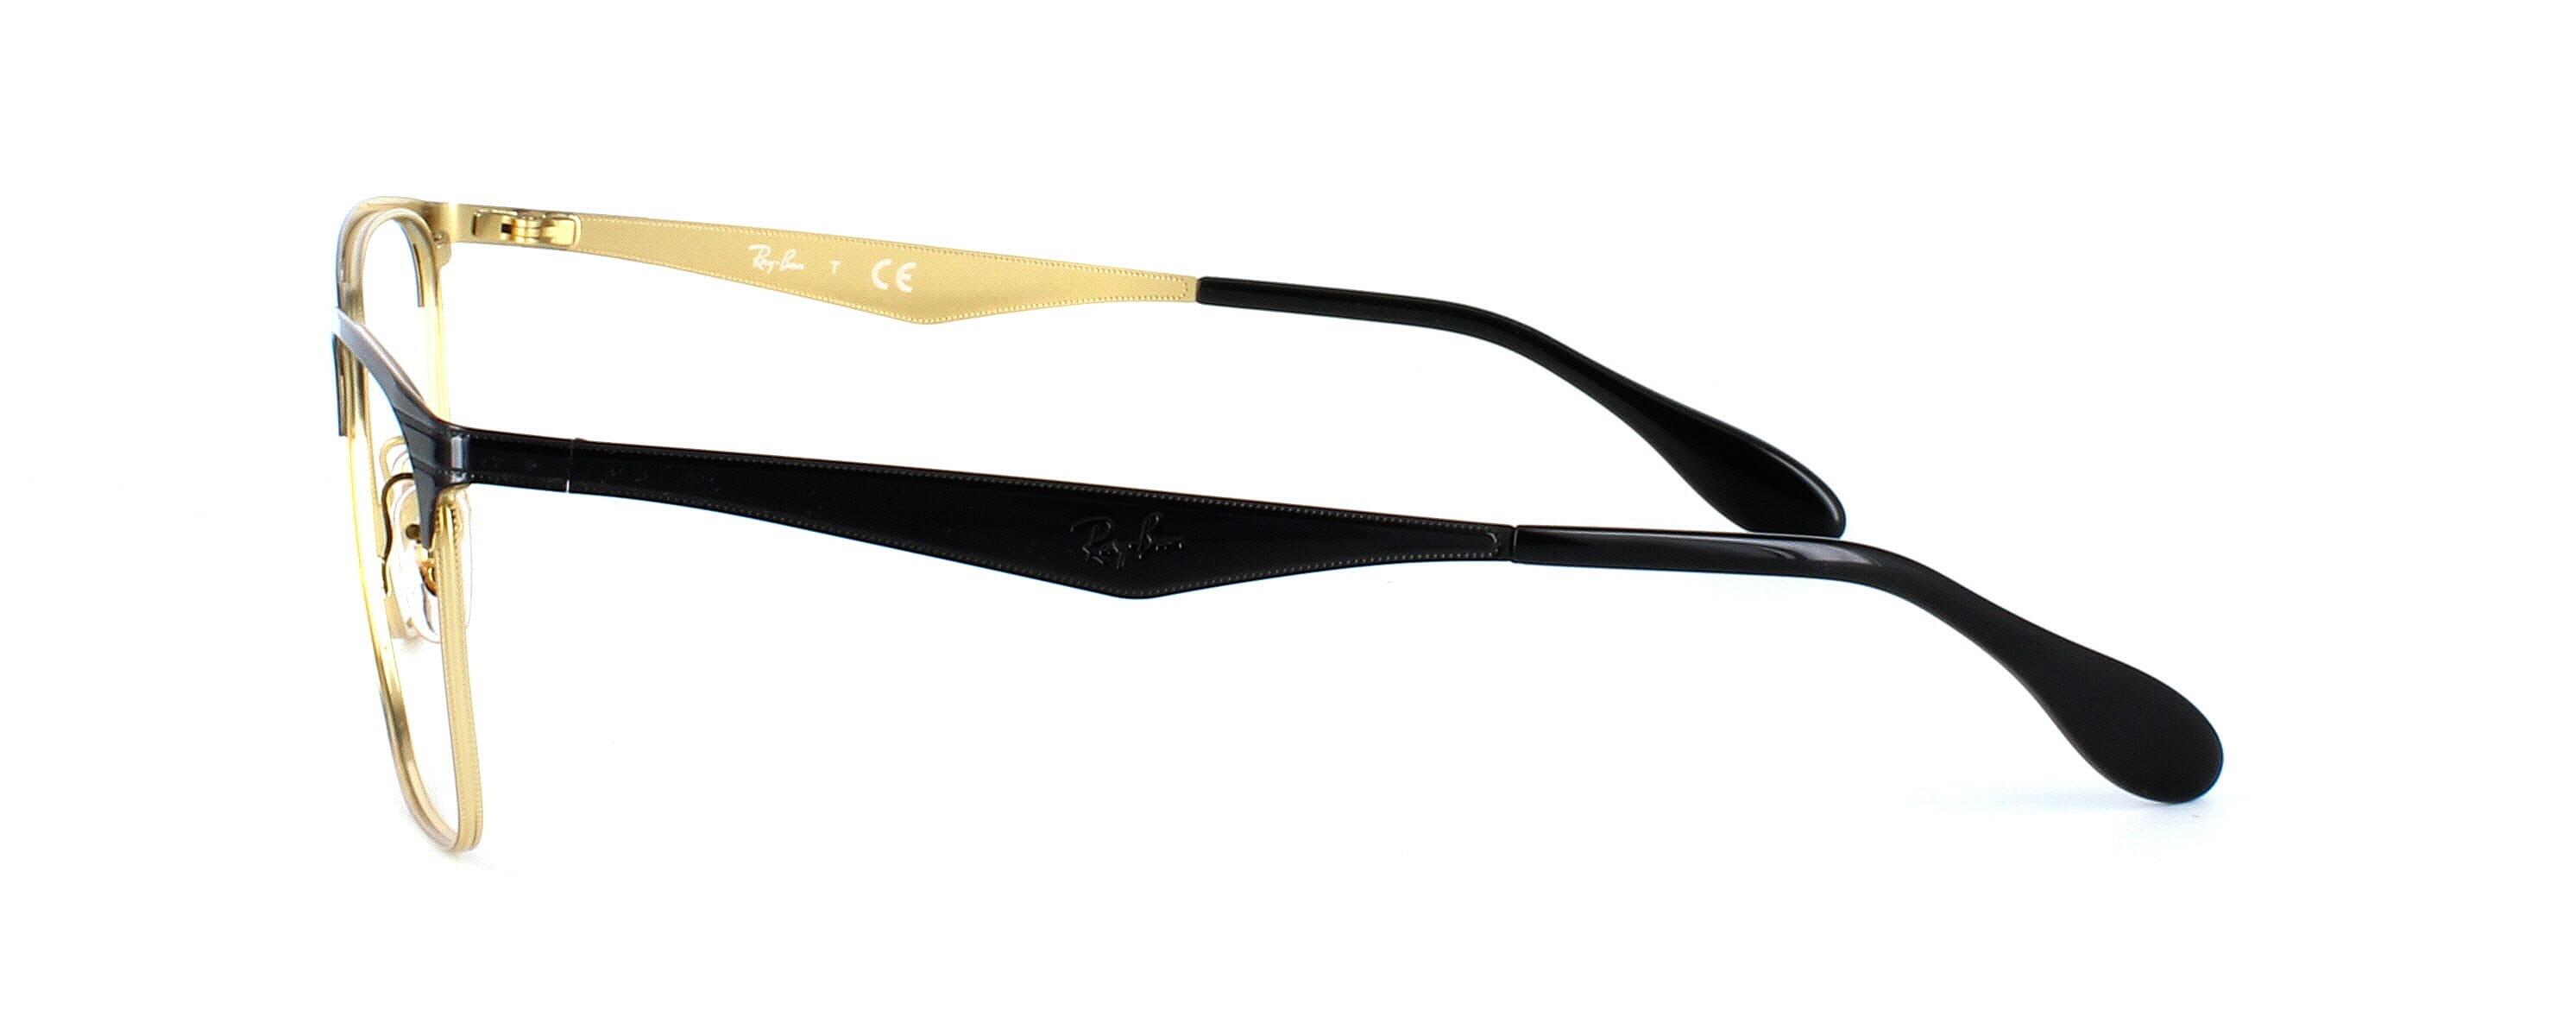 Ray Ban 6344 Black & Gold - Unisex 2-tone metal glasses frame - image view 3